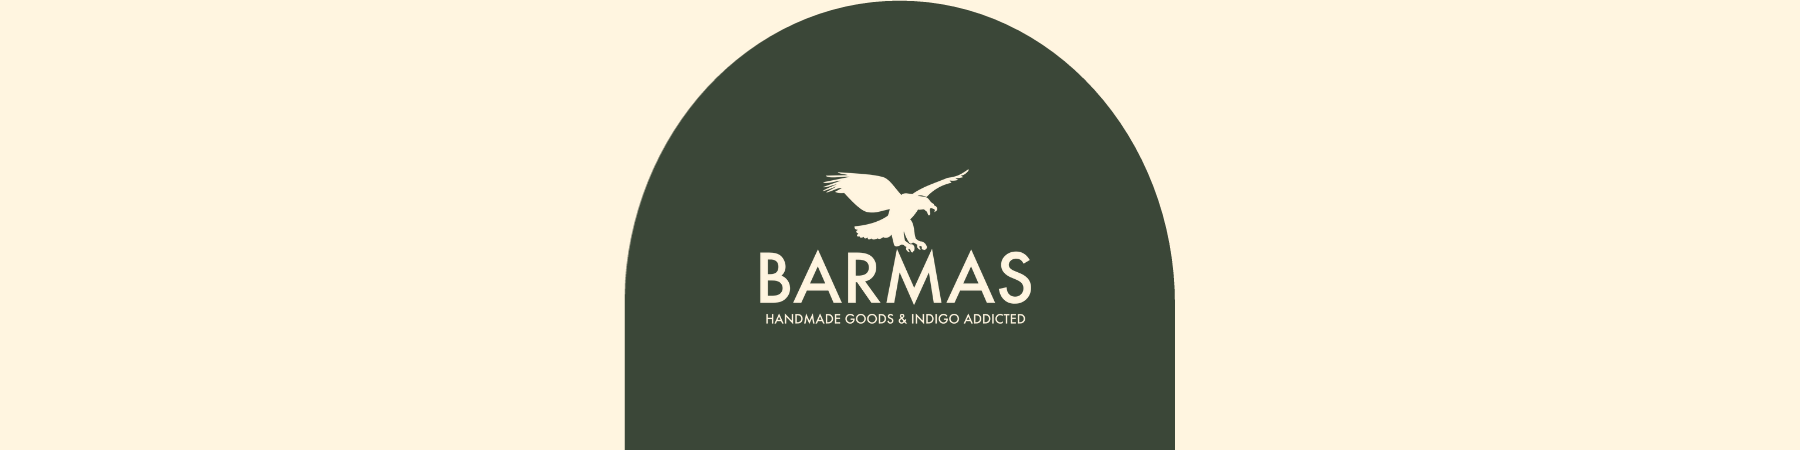 BARMAS - The Local Merchants